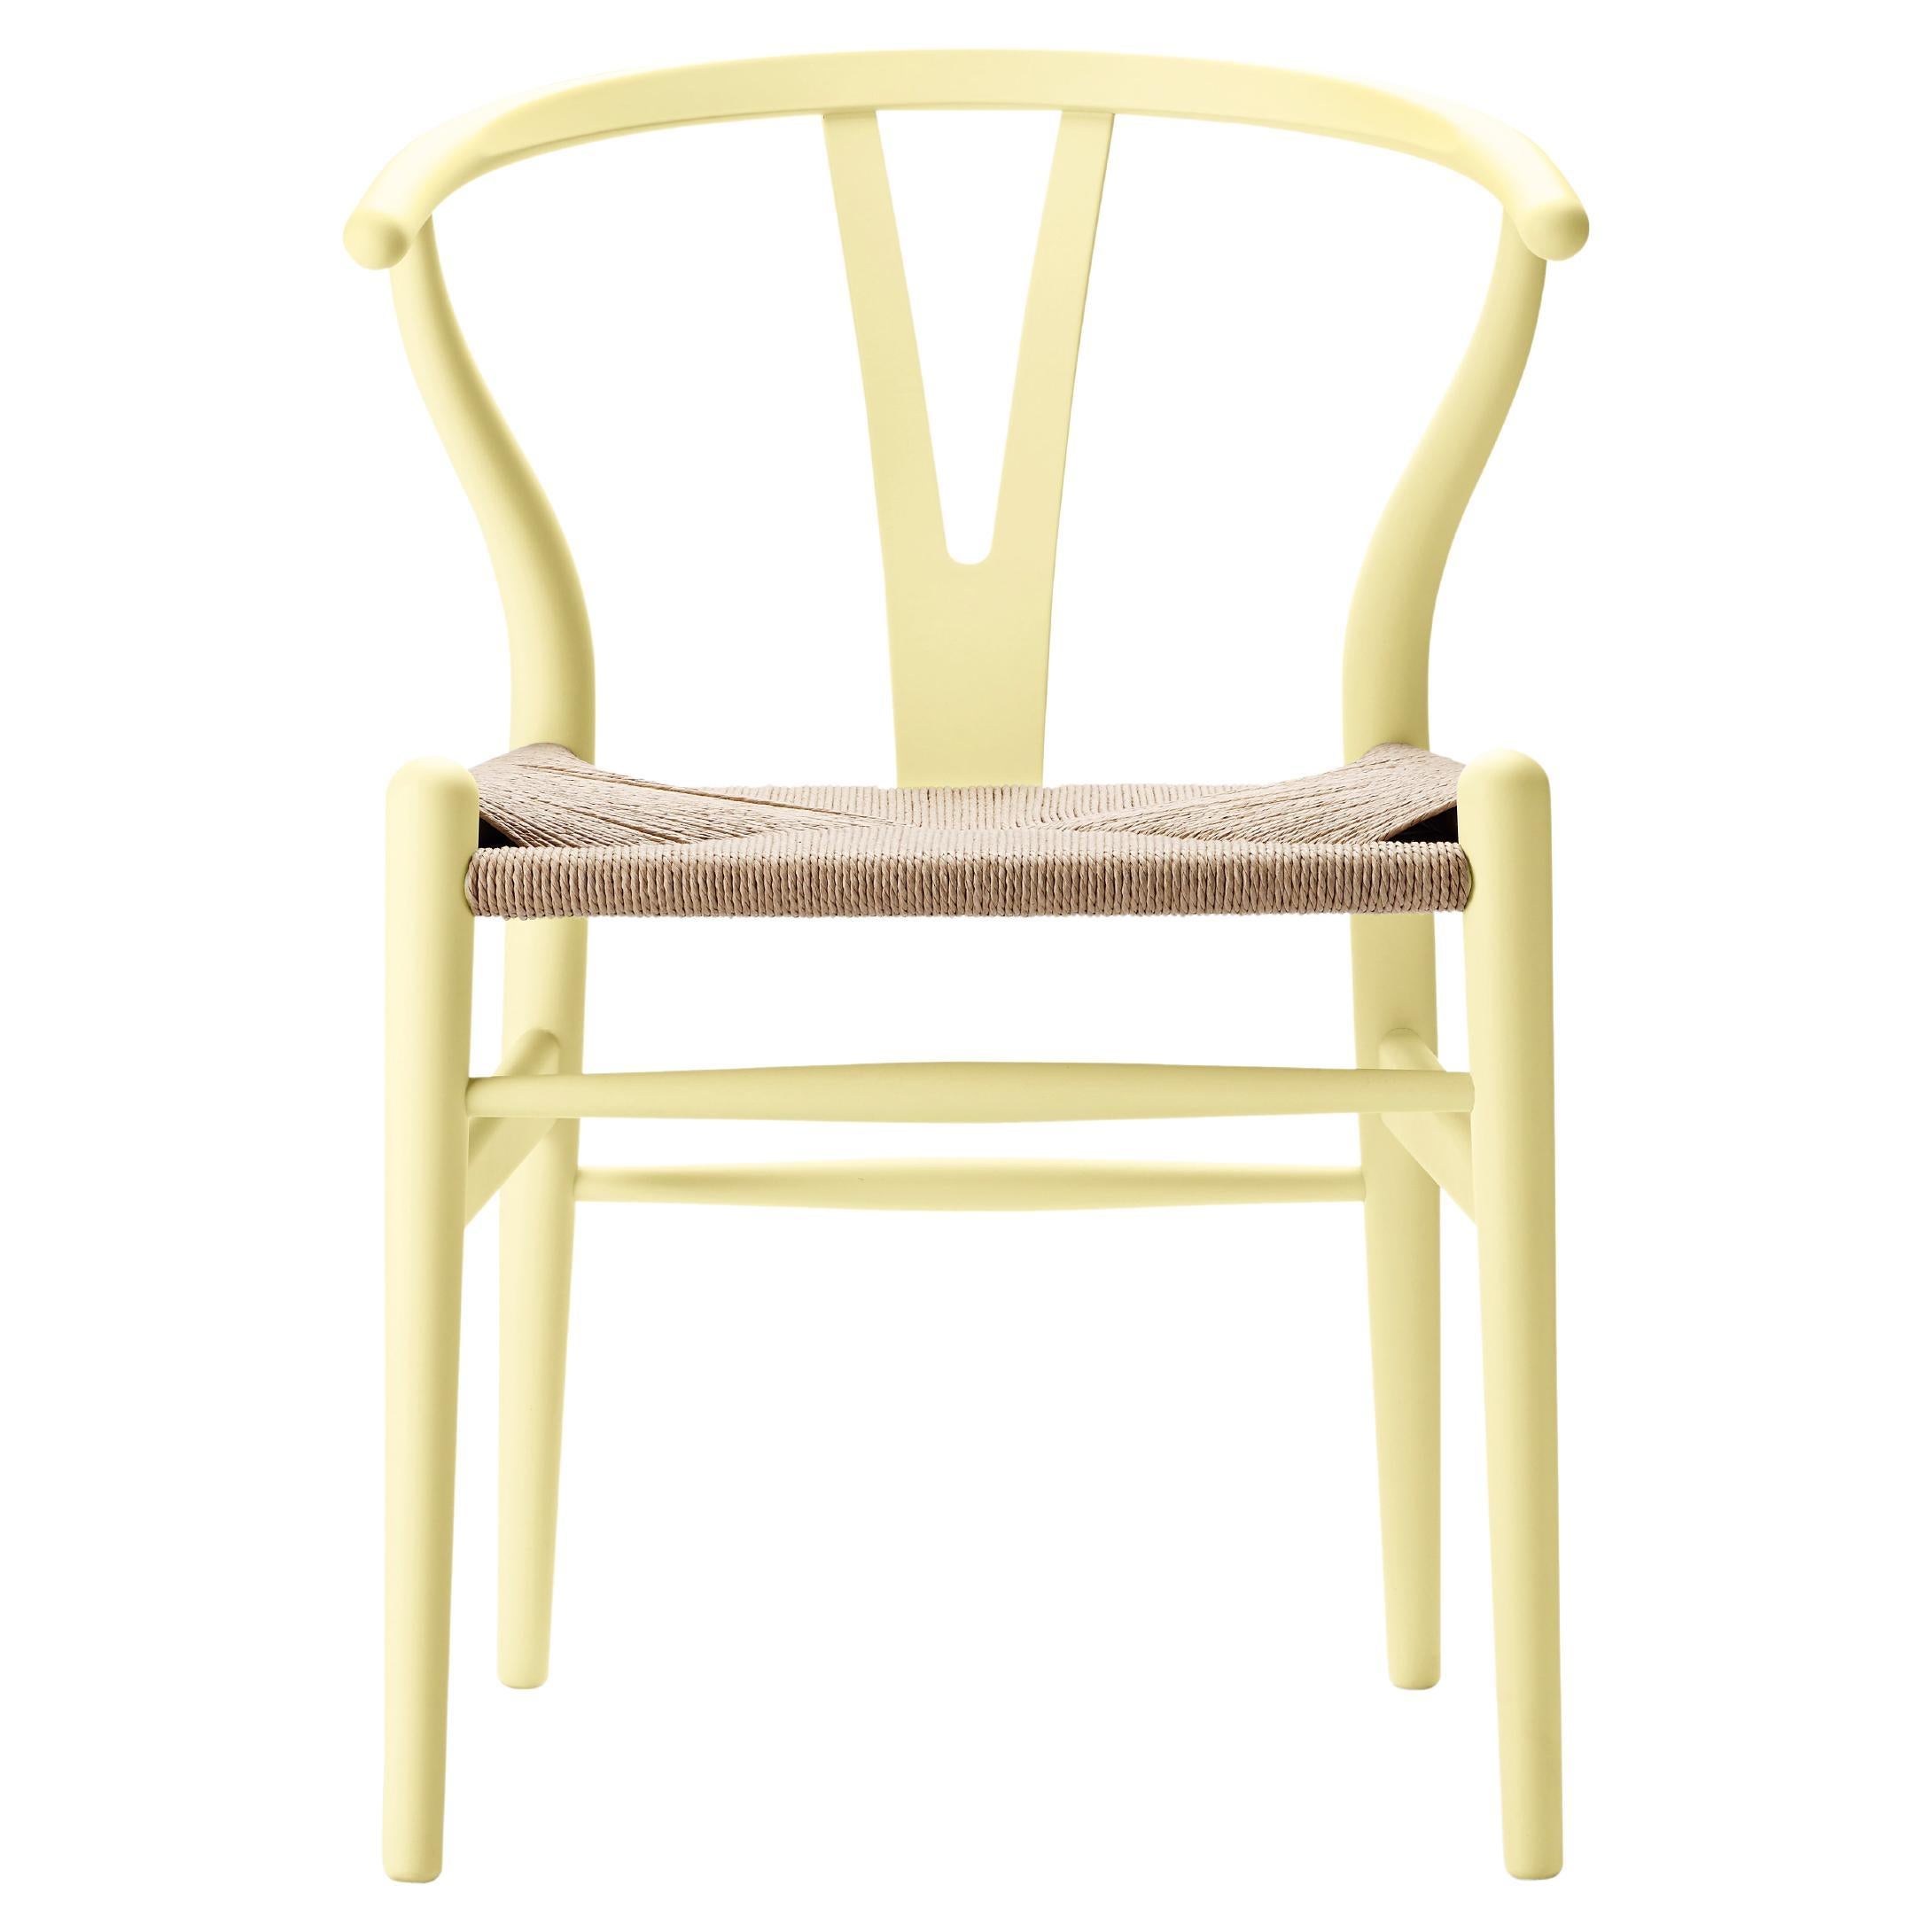 Carl Hansen CH24 Wishbone Chair, Ilse Crawford Soft Colors, Hollyhock